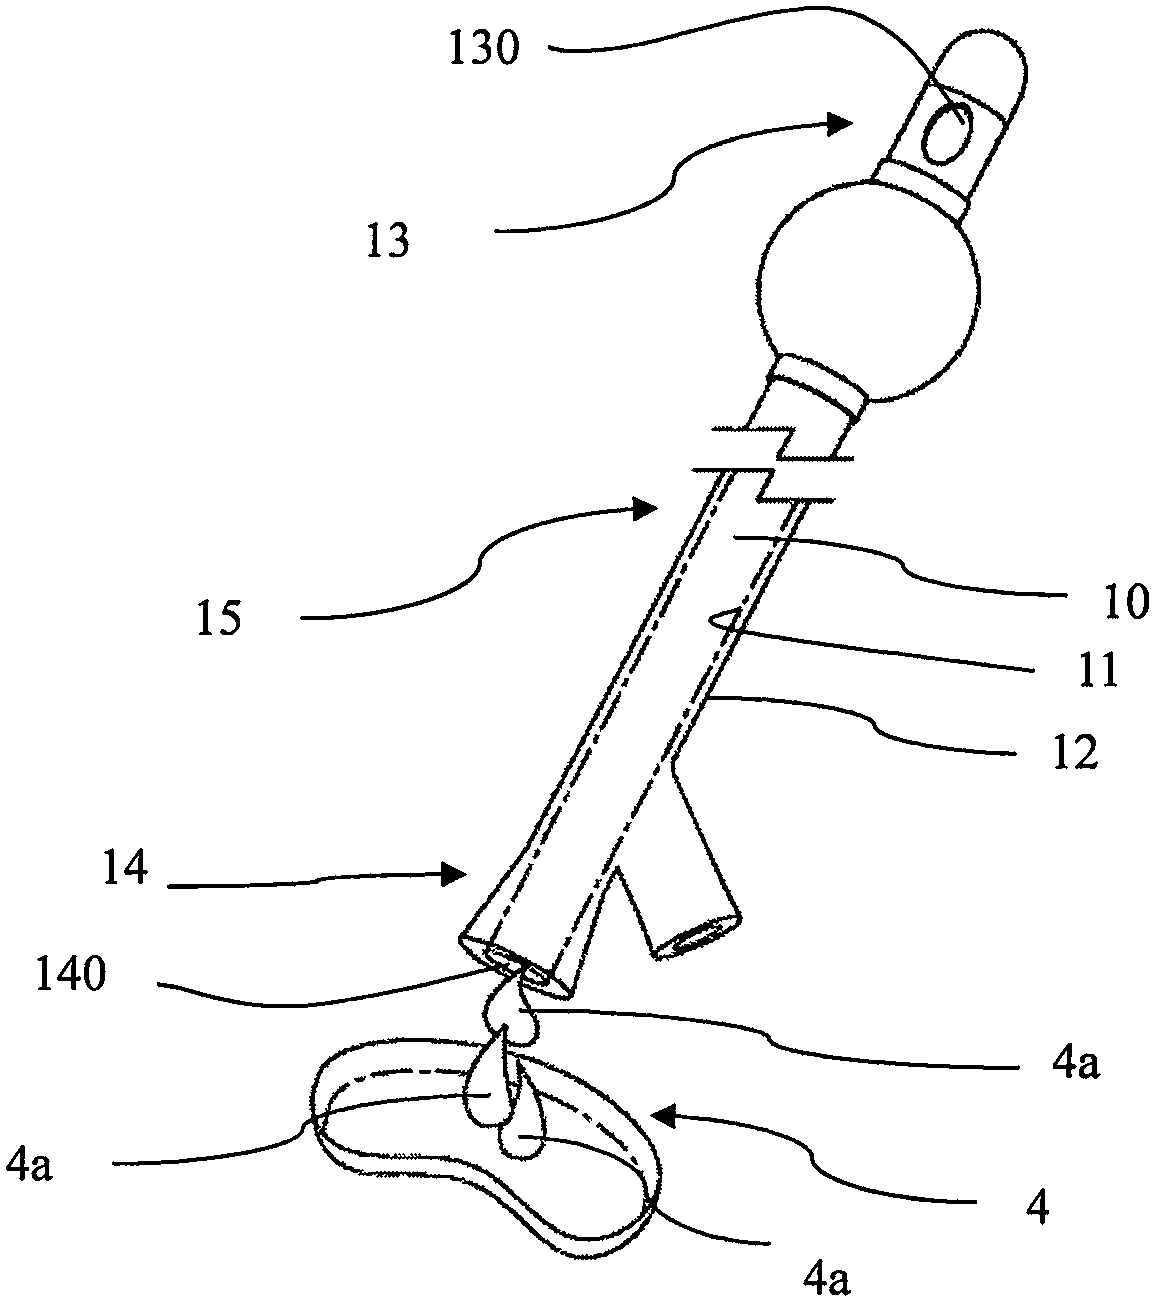 A stop-flow catheter